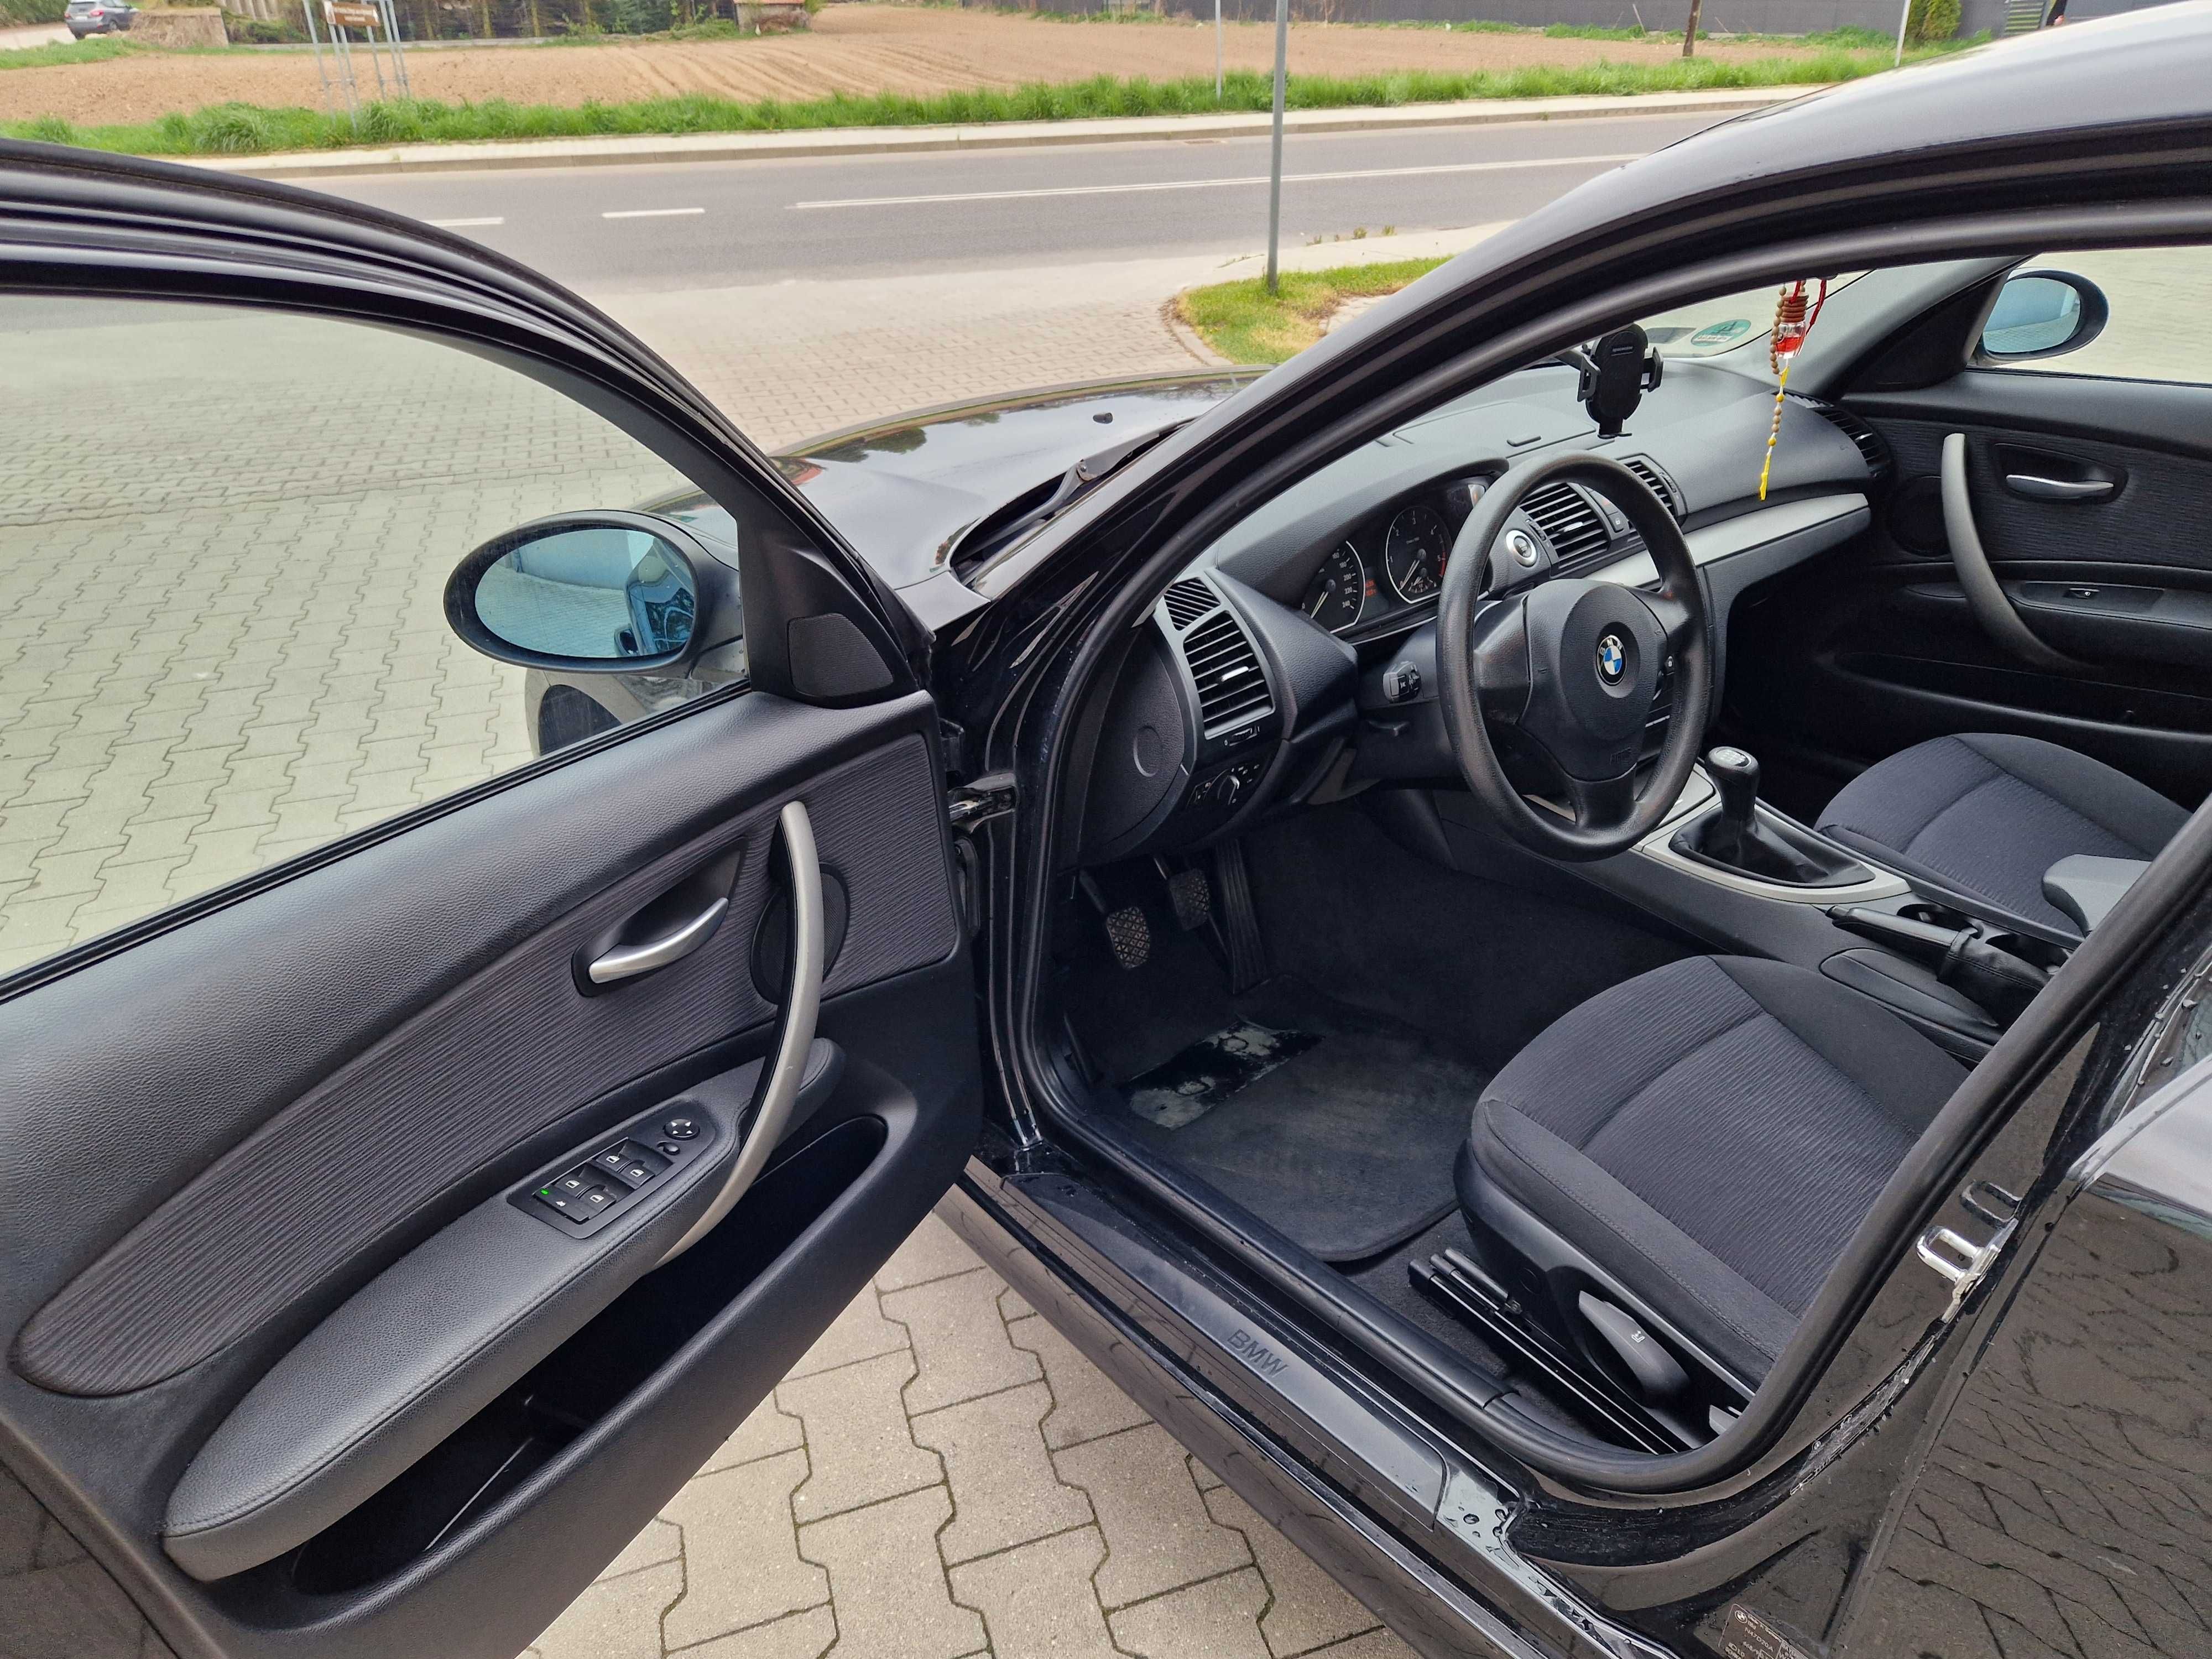 BMW SERIA1 E87 *śliczna czarna* 2008rok LIFT